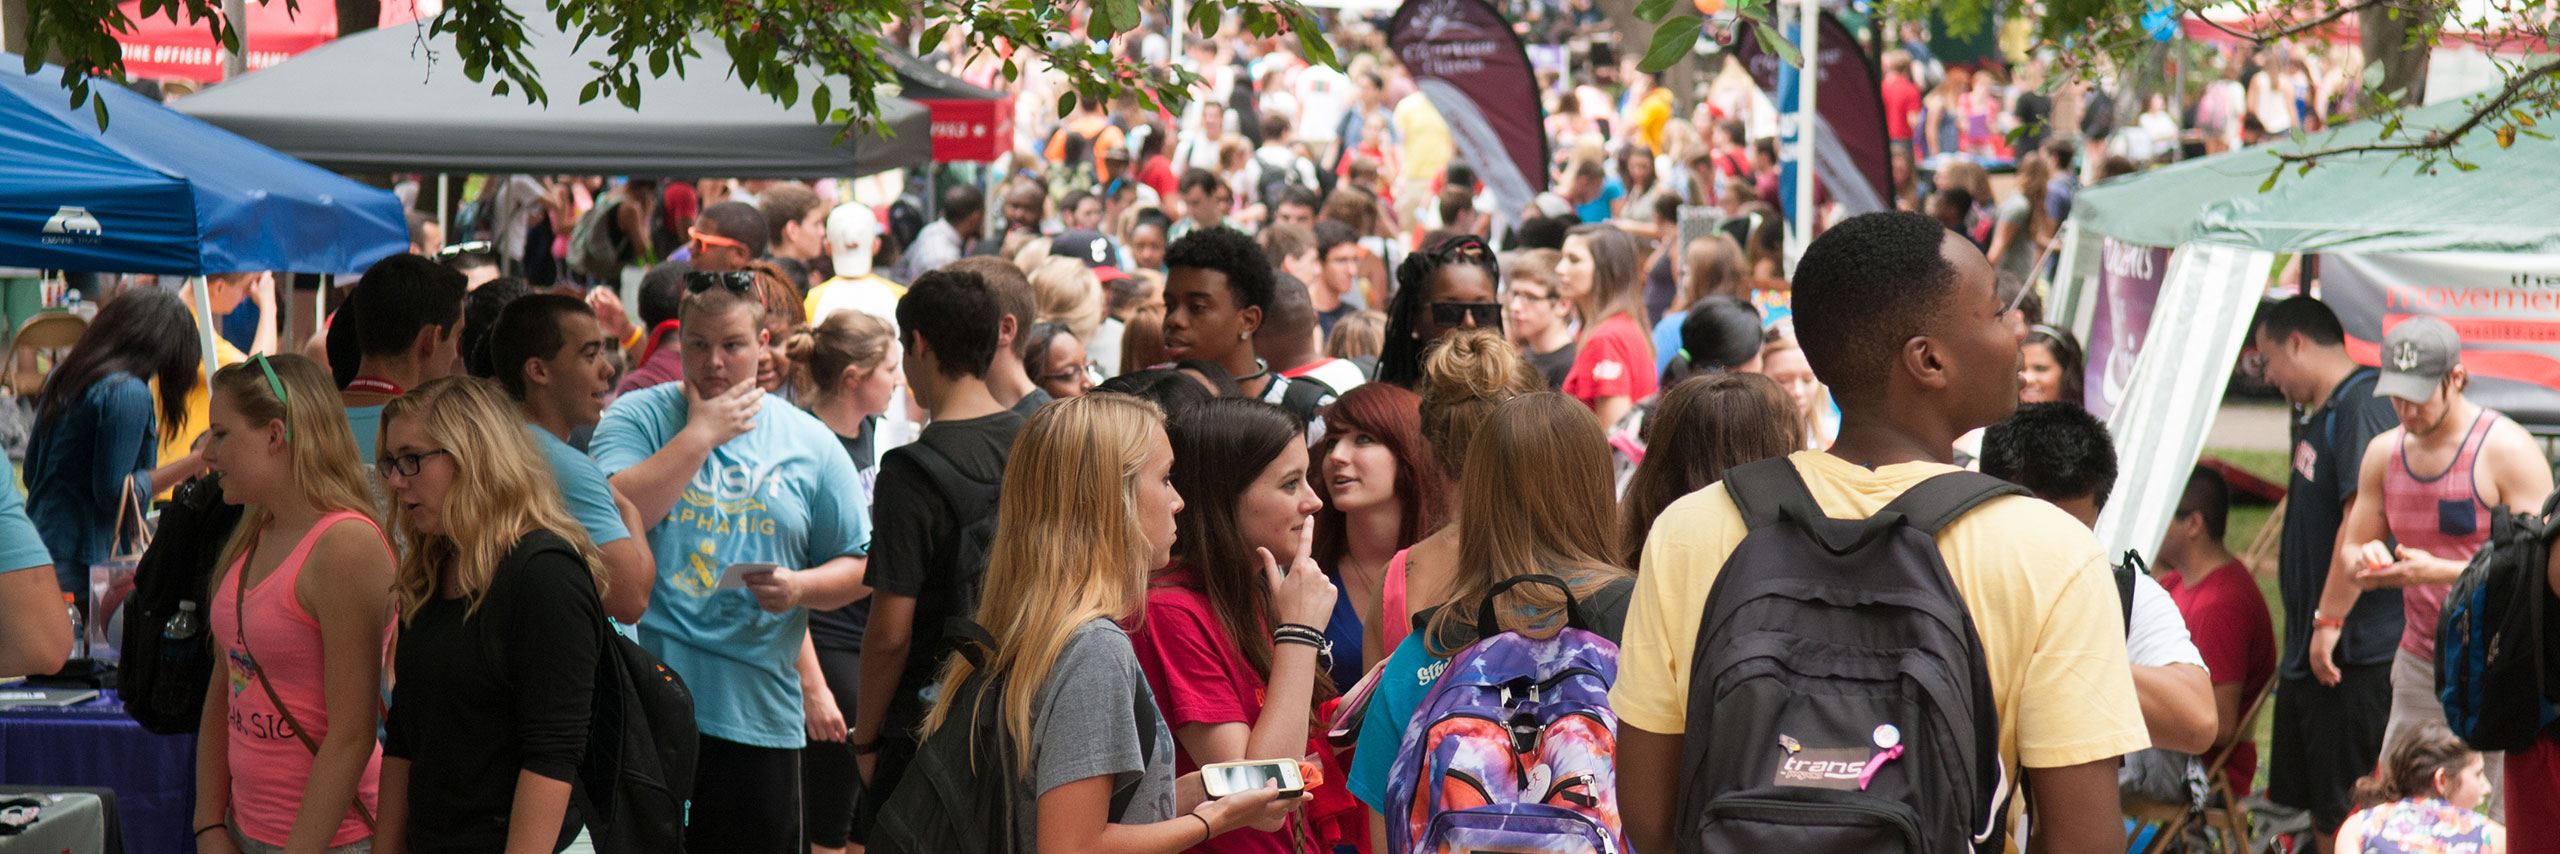 university students on the quad during festival ISU